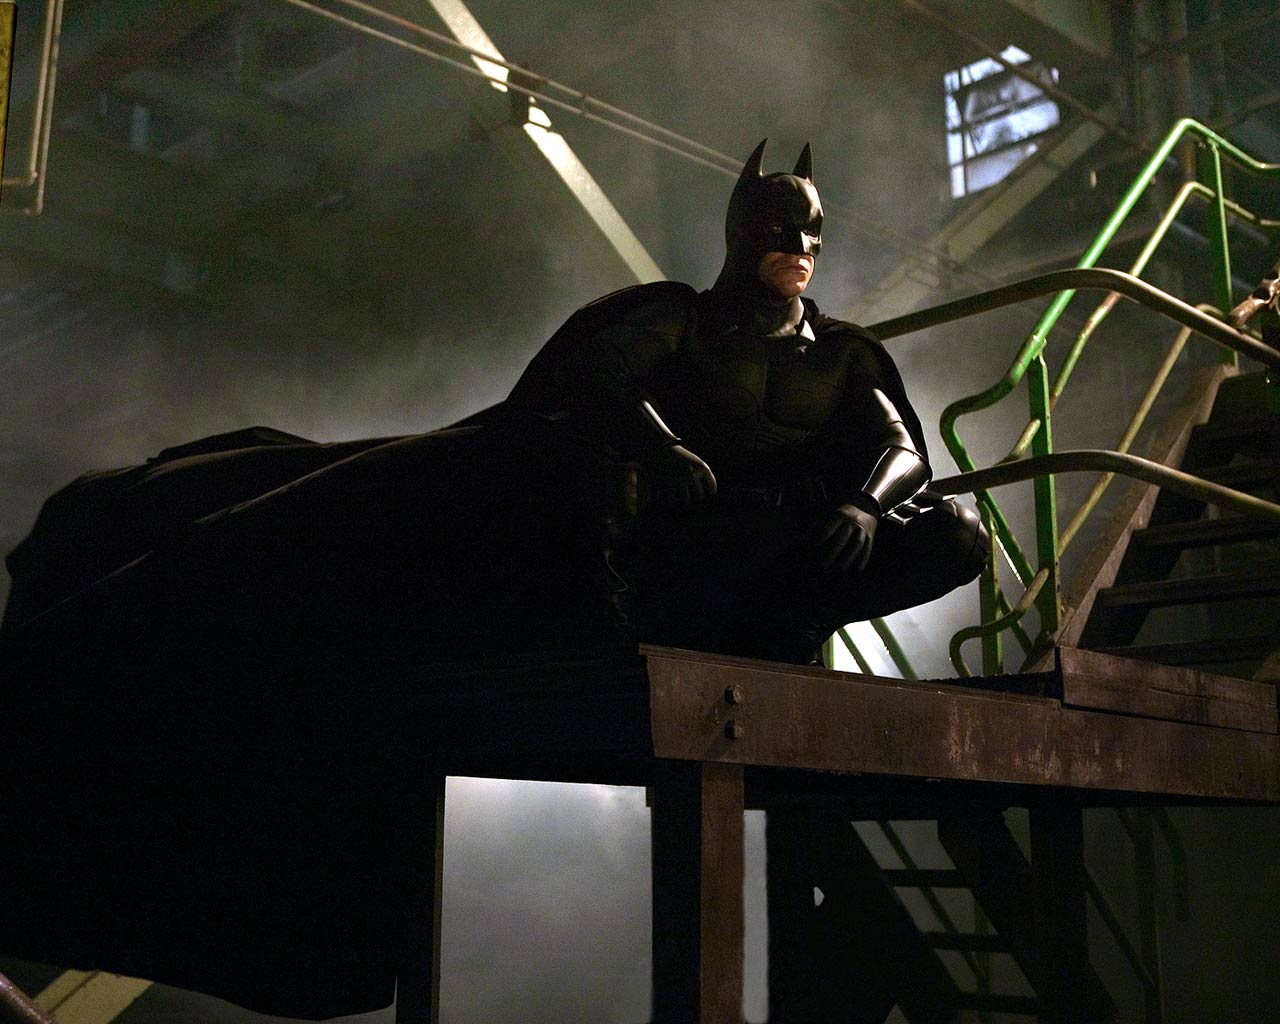 Batman Begins wallpaper - Wallpapers - Movie extras - Movies ...